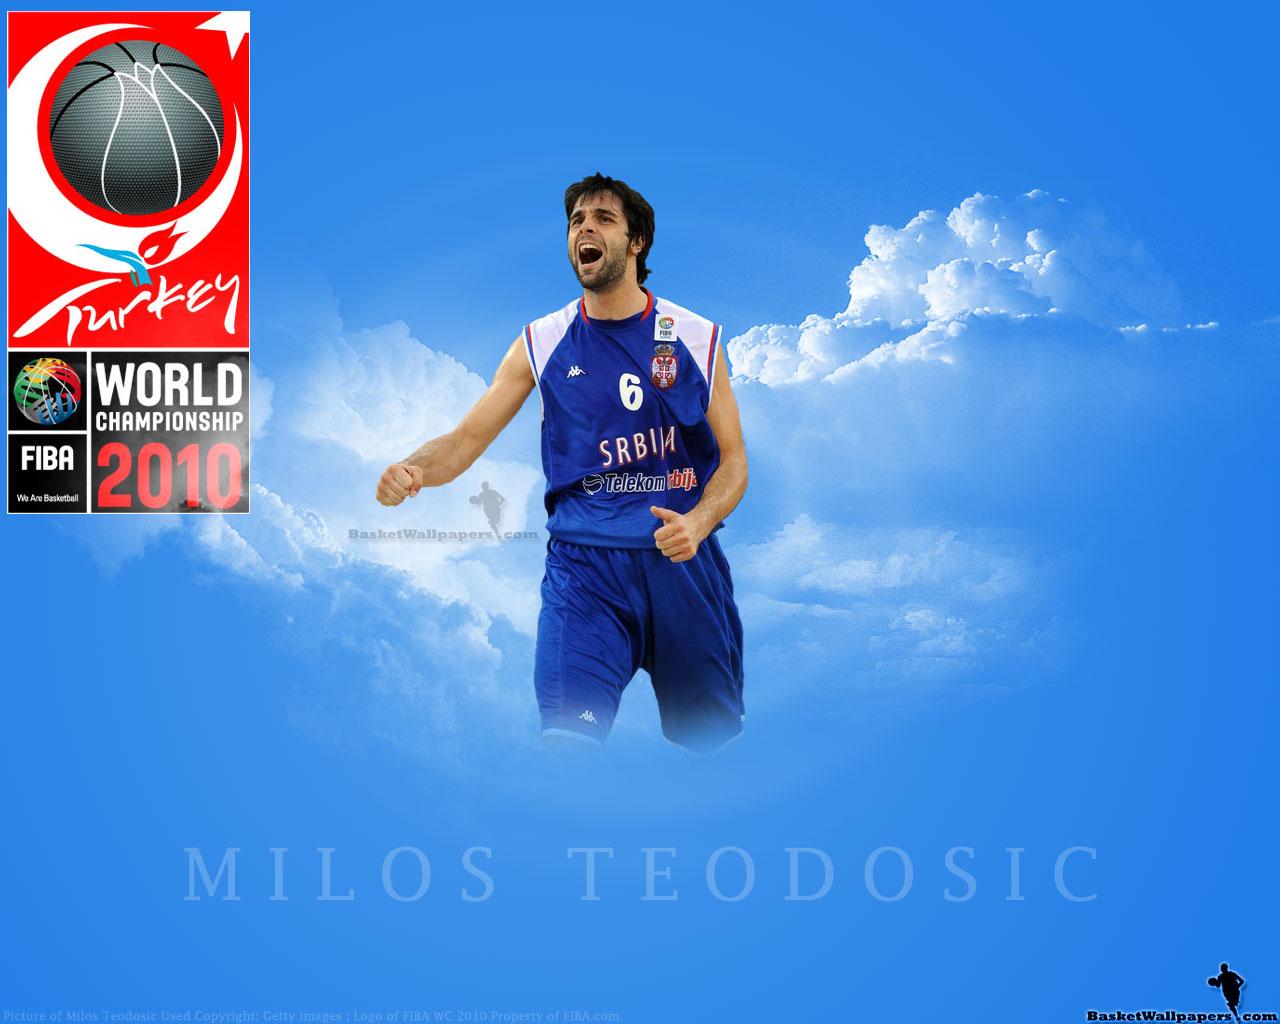 Milos Teodosic FIBA World Championship 2010 Wallpaper. Basketball